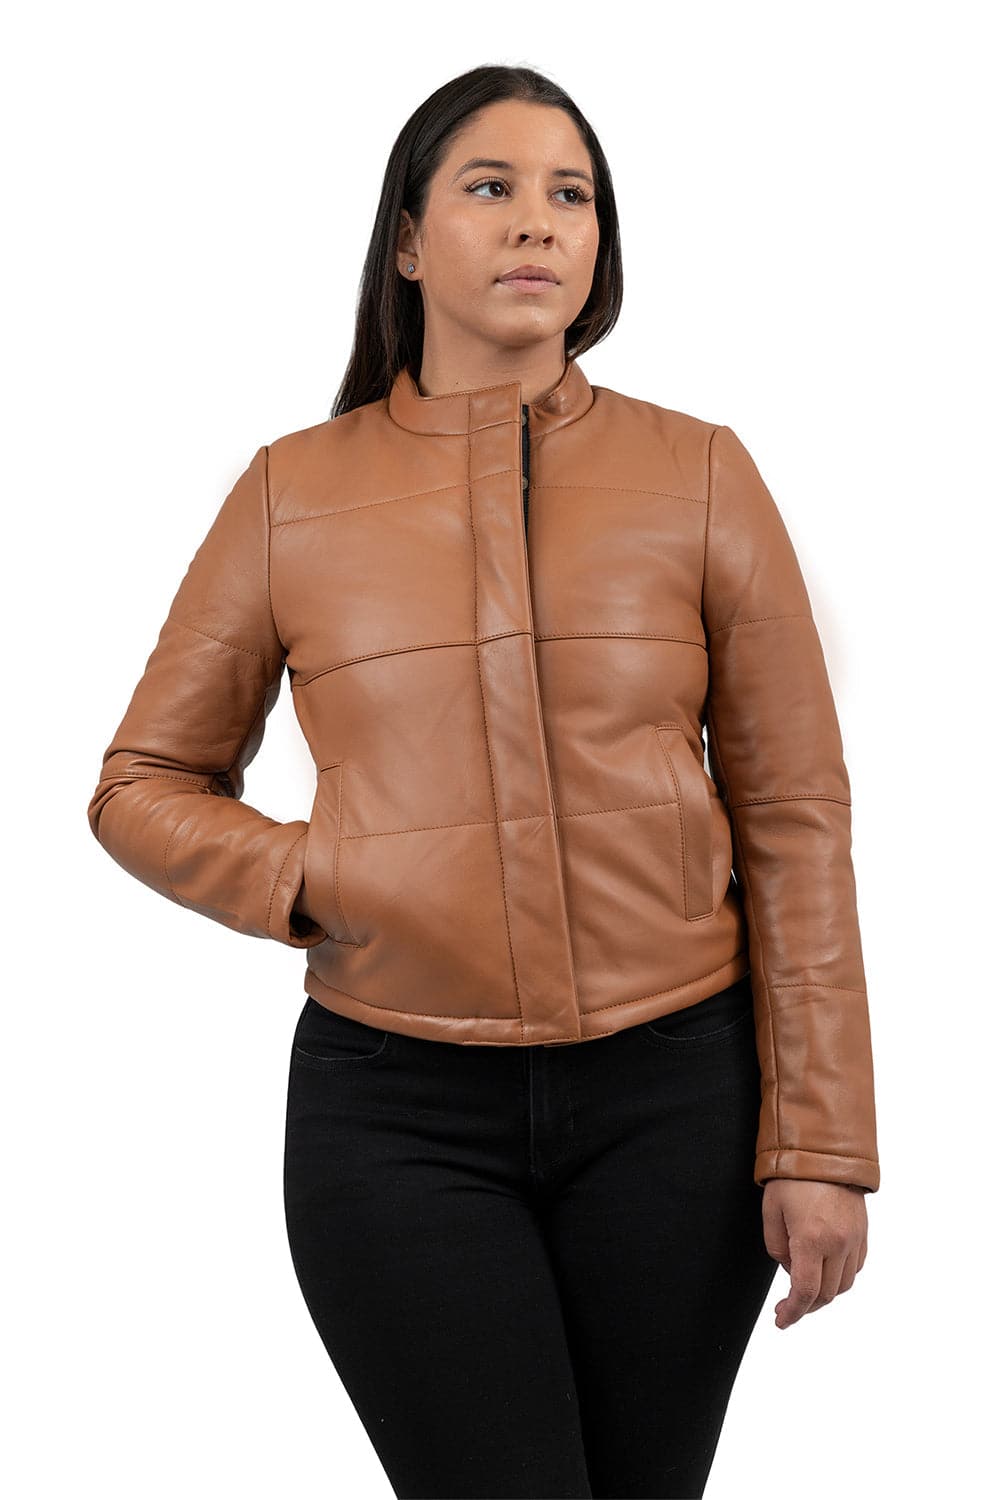 Melysa - Women's Leather Jacket Women's Leather Jacket Whet Blu NYC XS COGNAC 